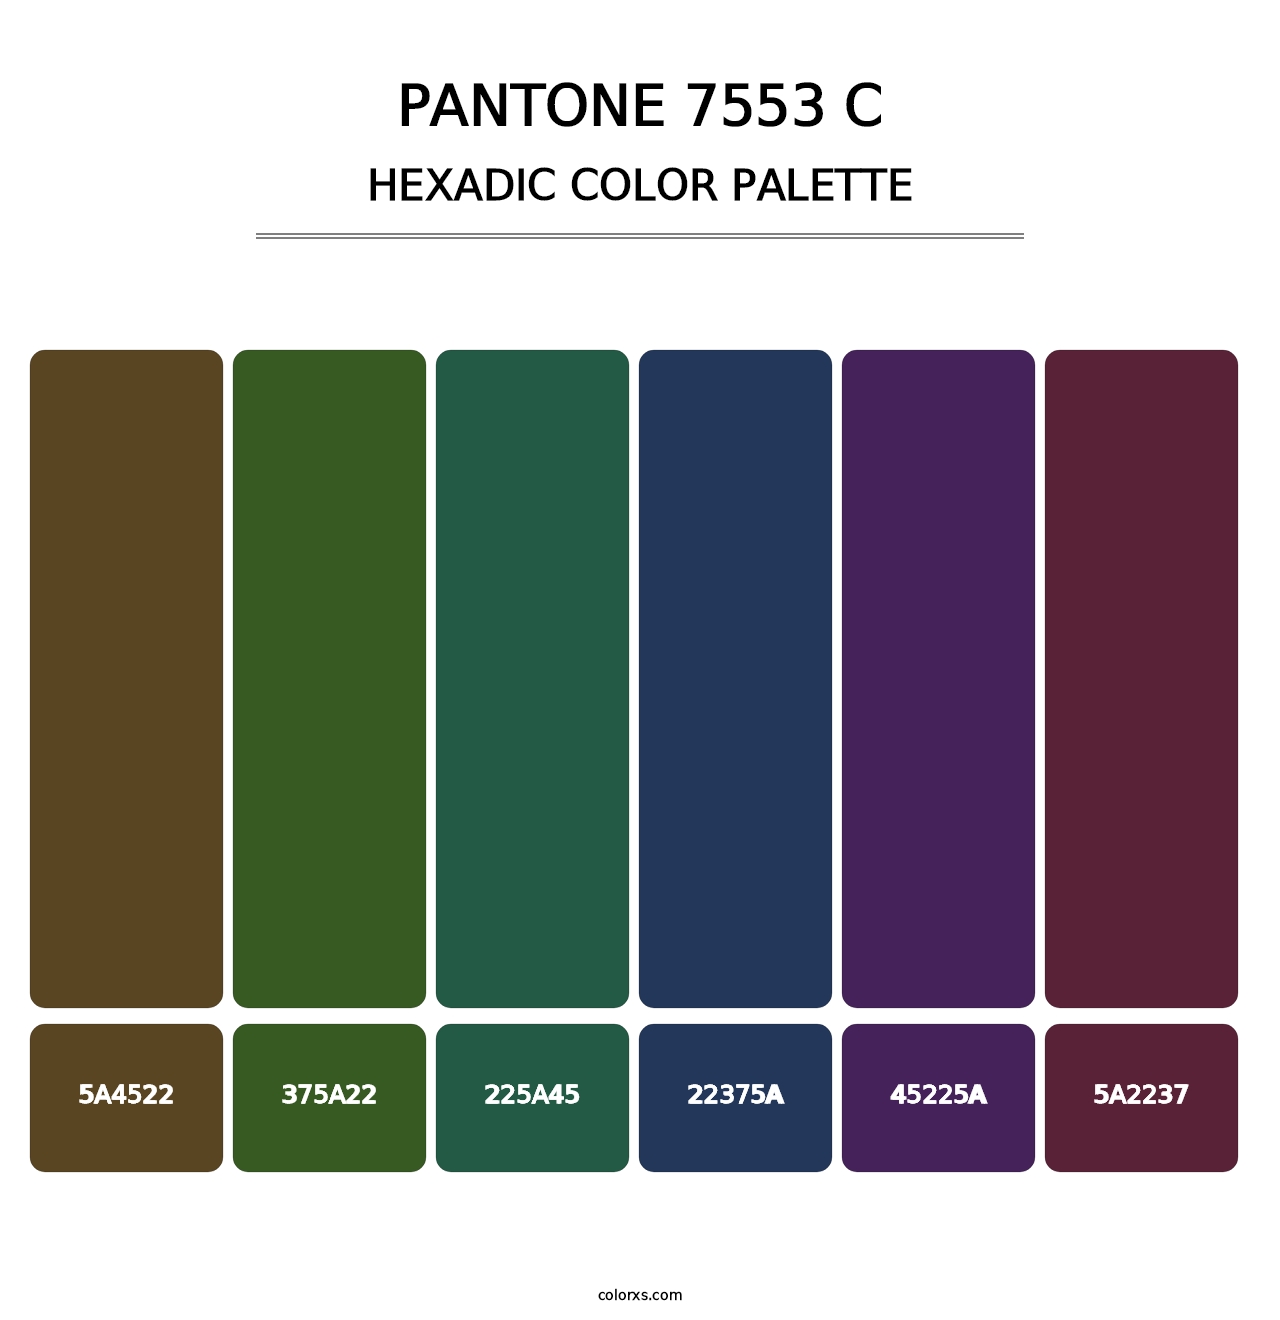 PANTONE 7553 C - Hexadic Color Palette